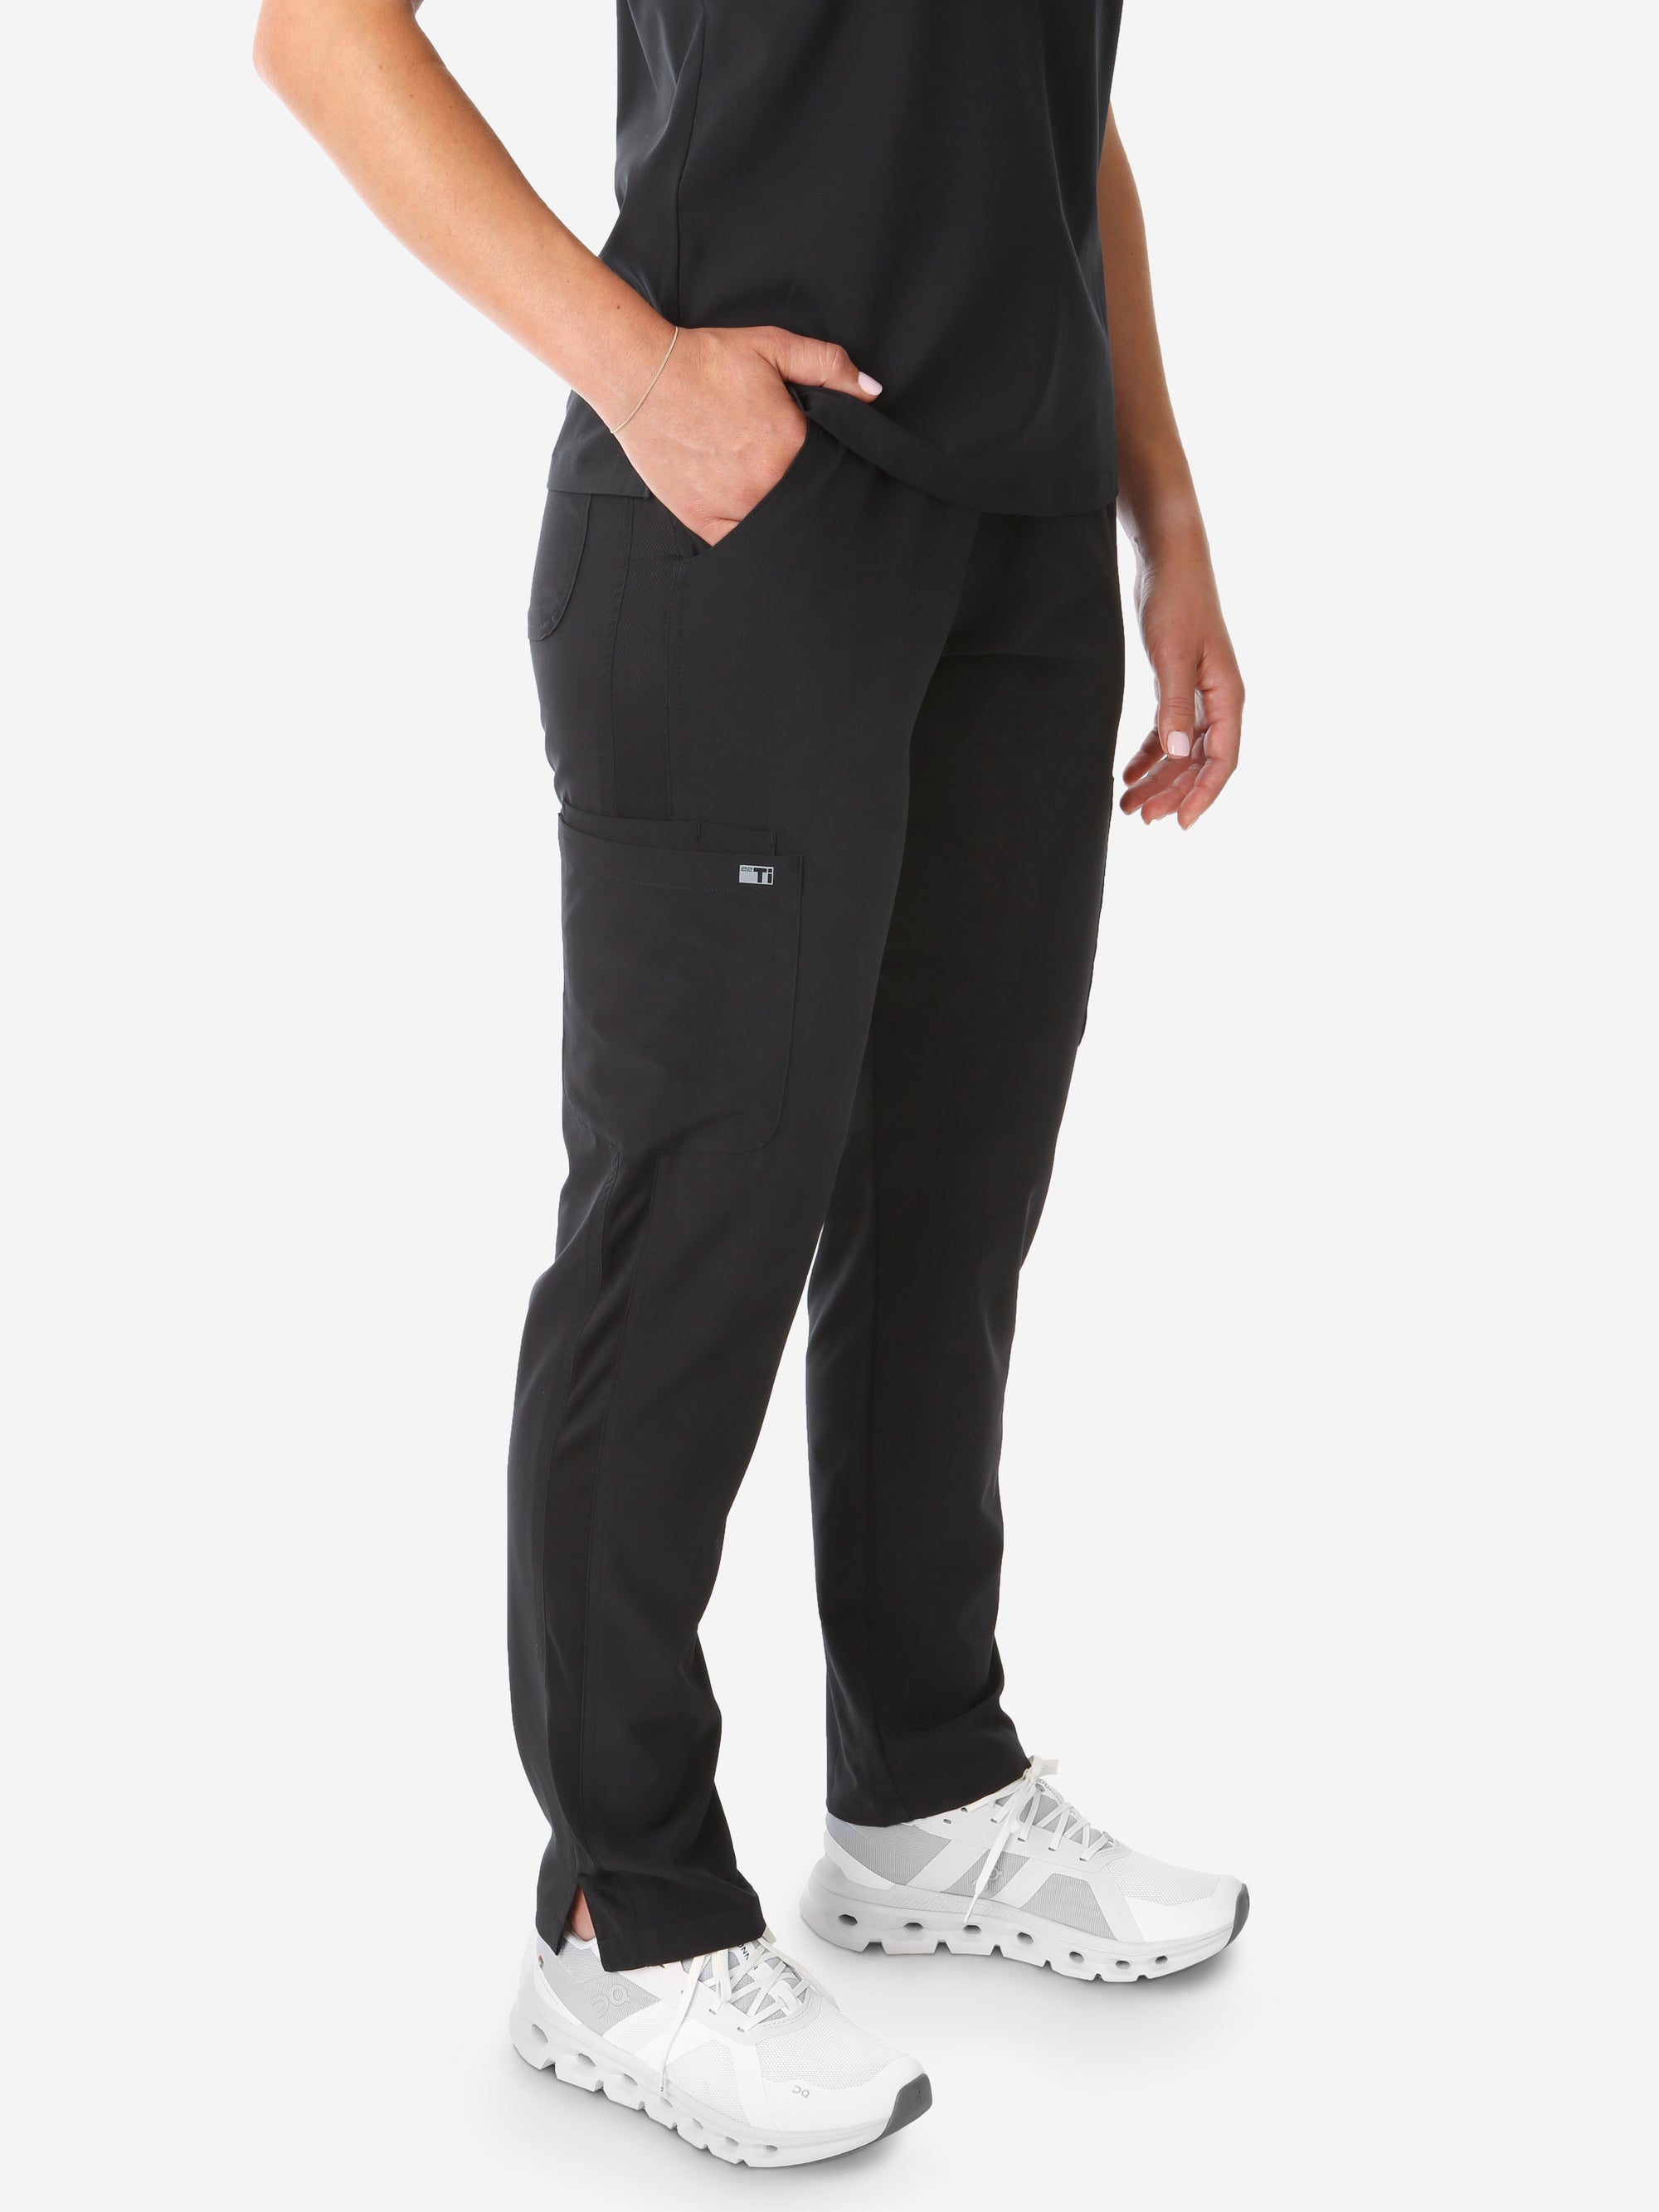 TiScrubs Real Black Women's Stretch 9-Pocket Pants Side View Pants Only